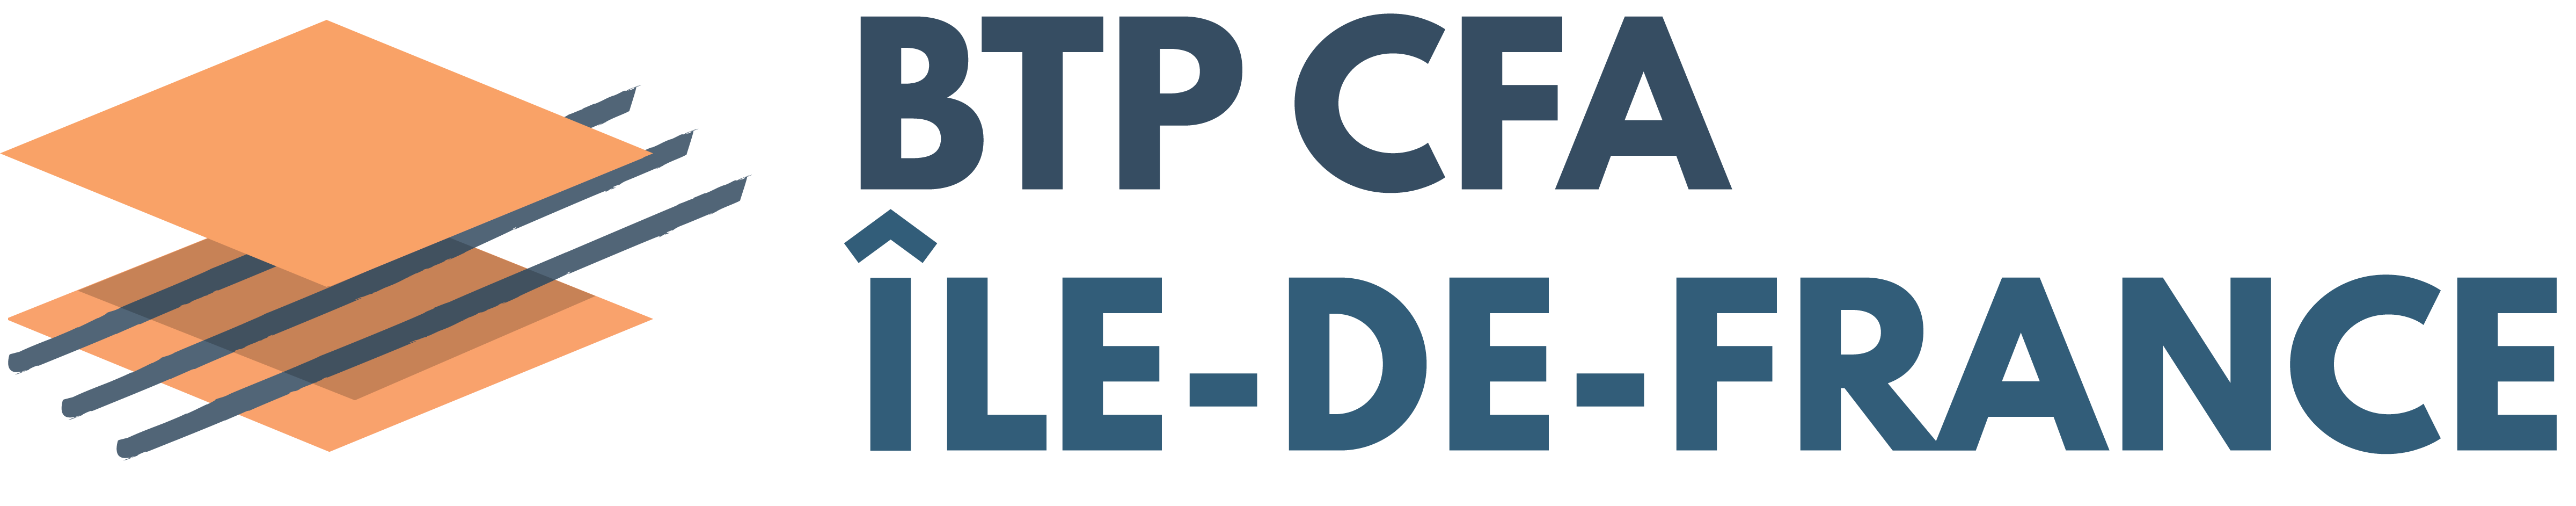 Logo BTP CFA IDF